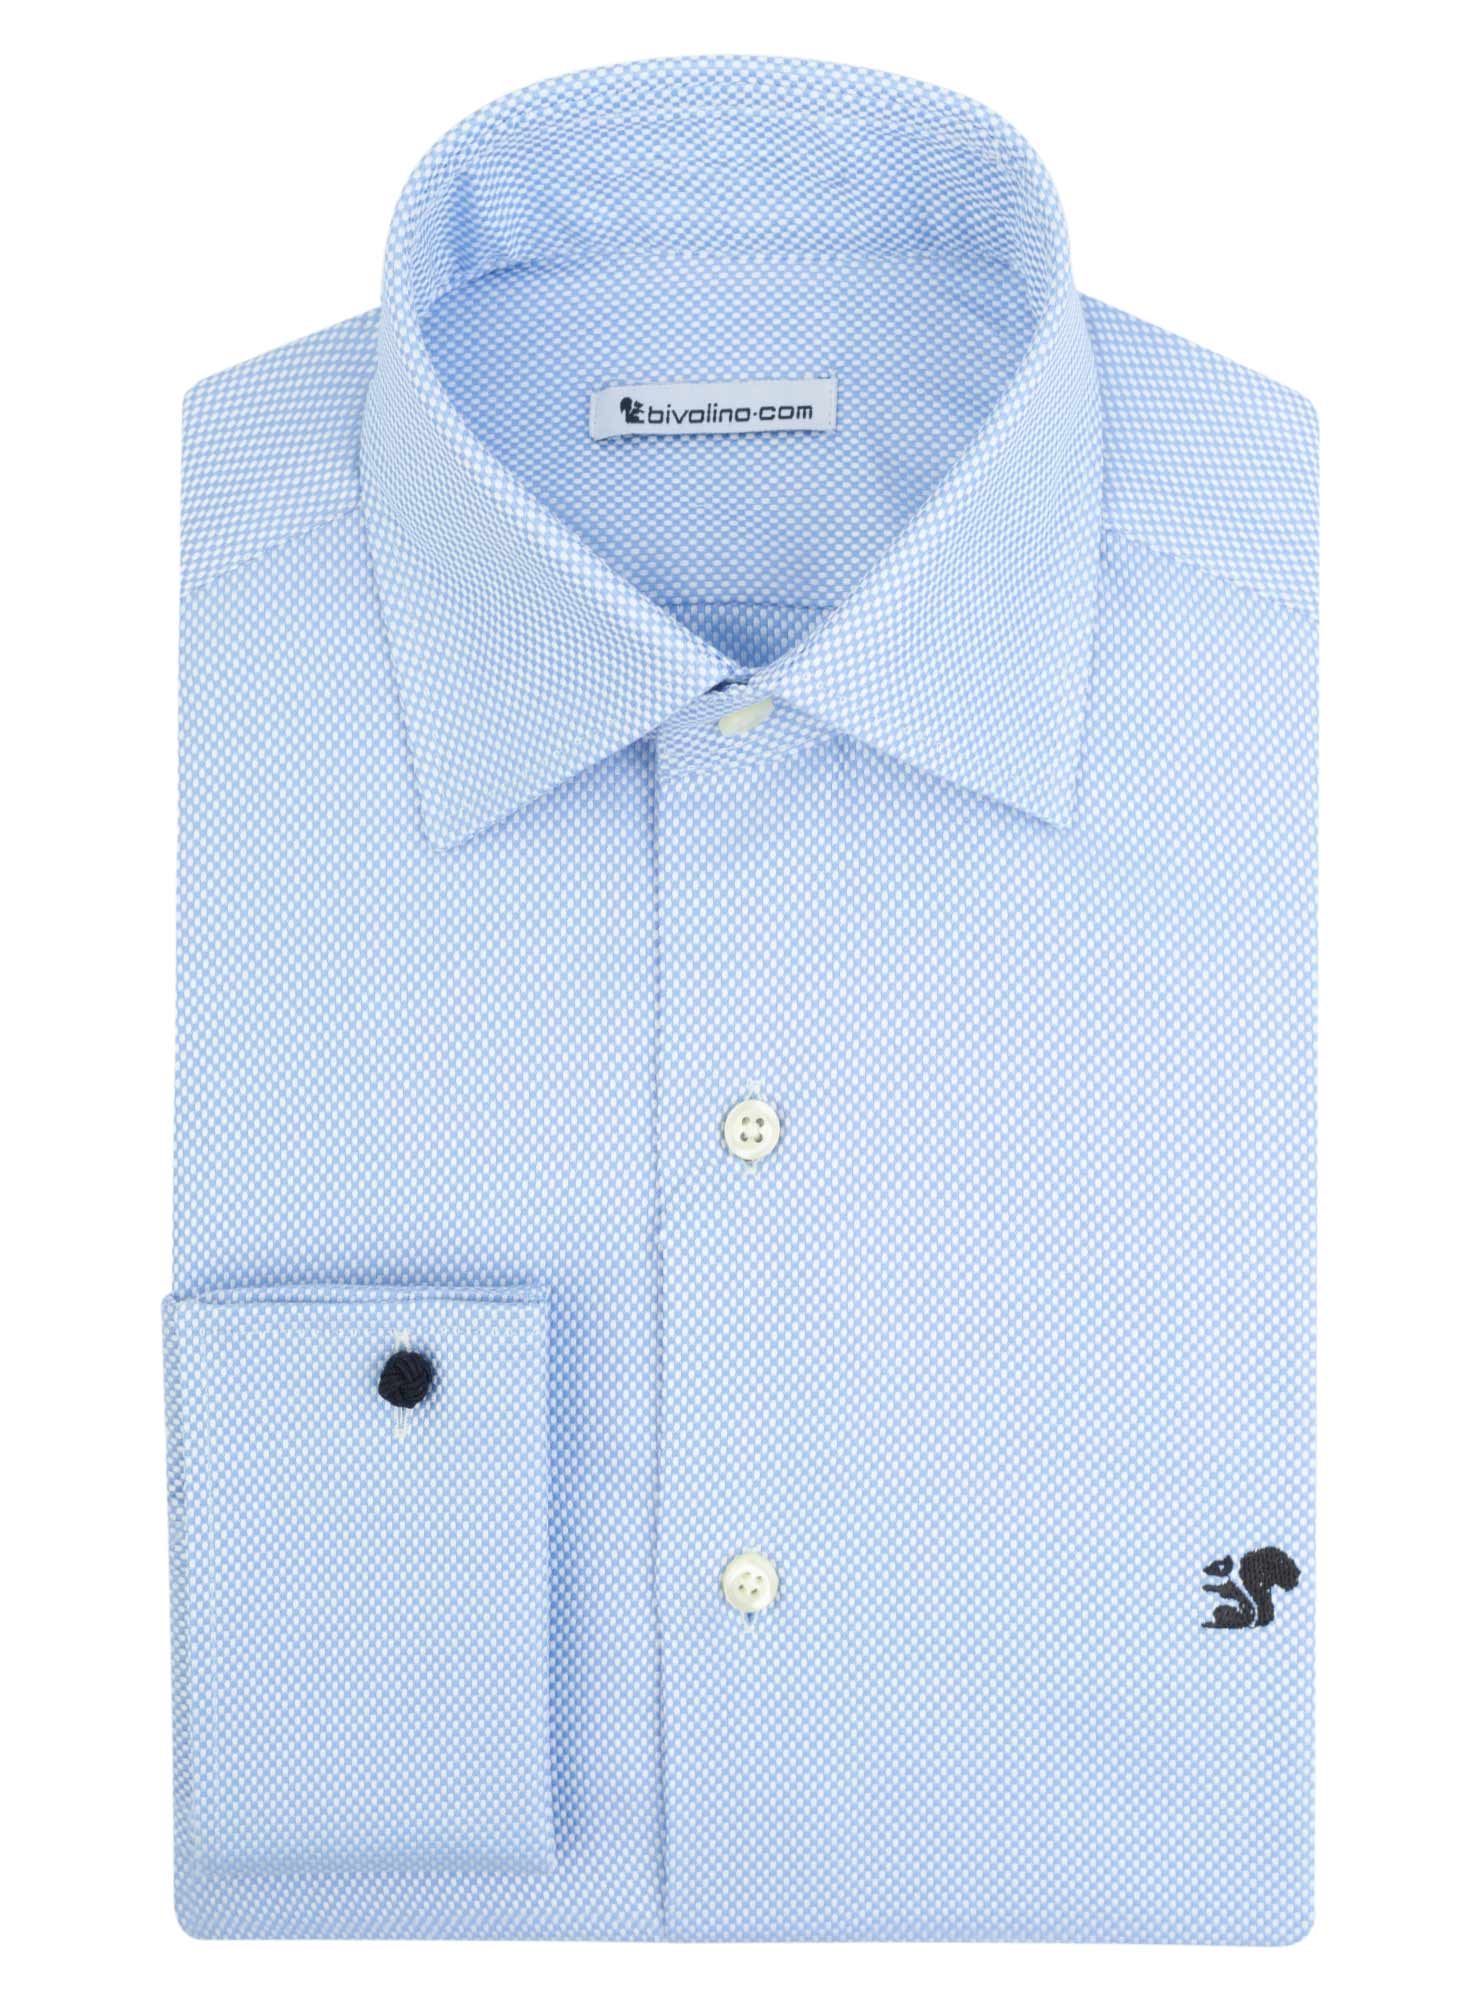 PORDENONE - chemise homme sur mesure dobby oxford royal bleu - Bedford 2